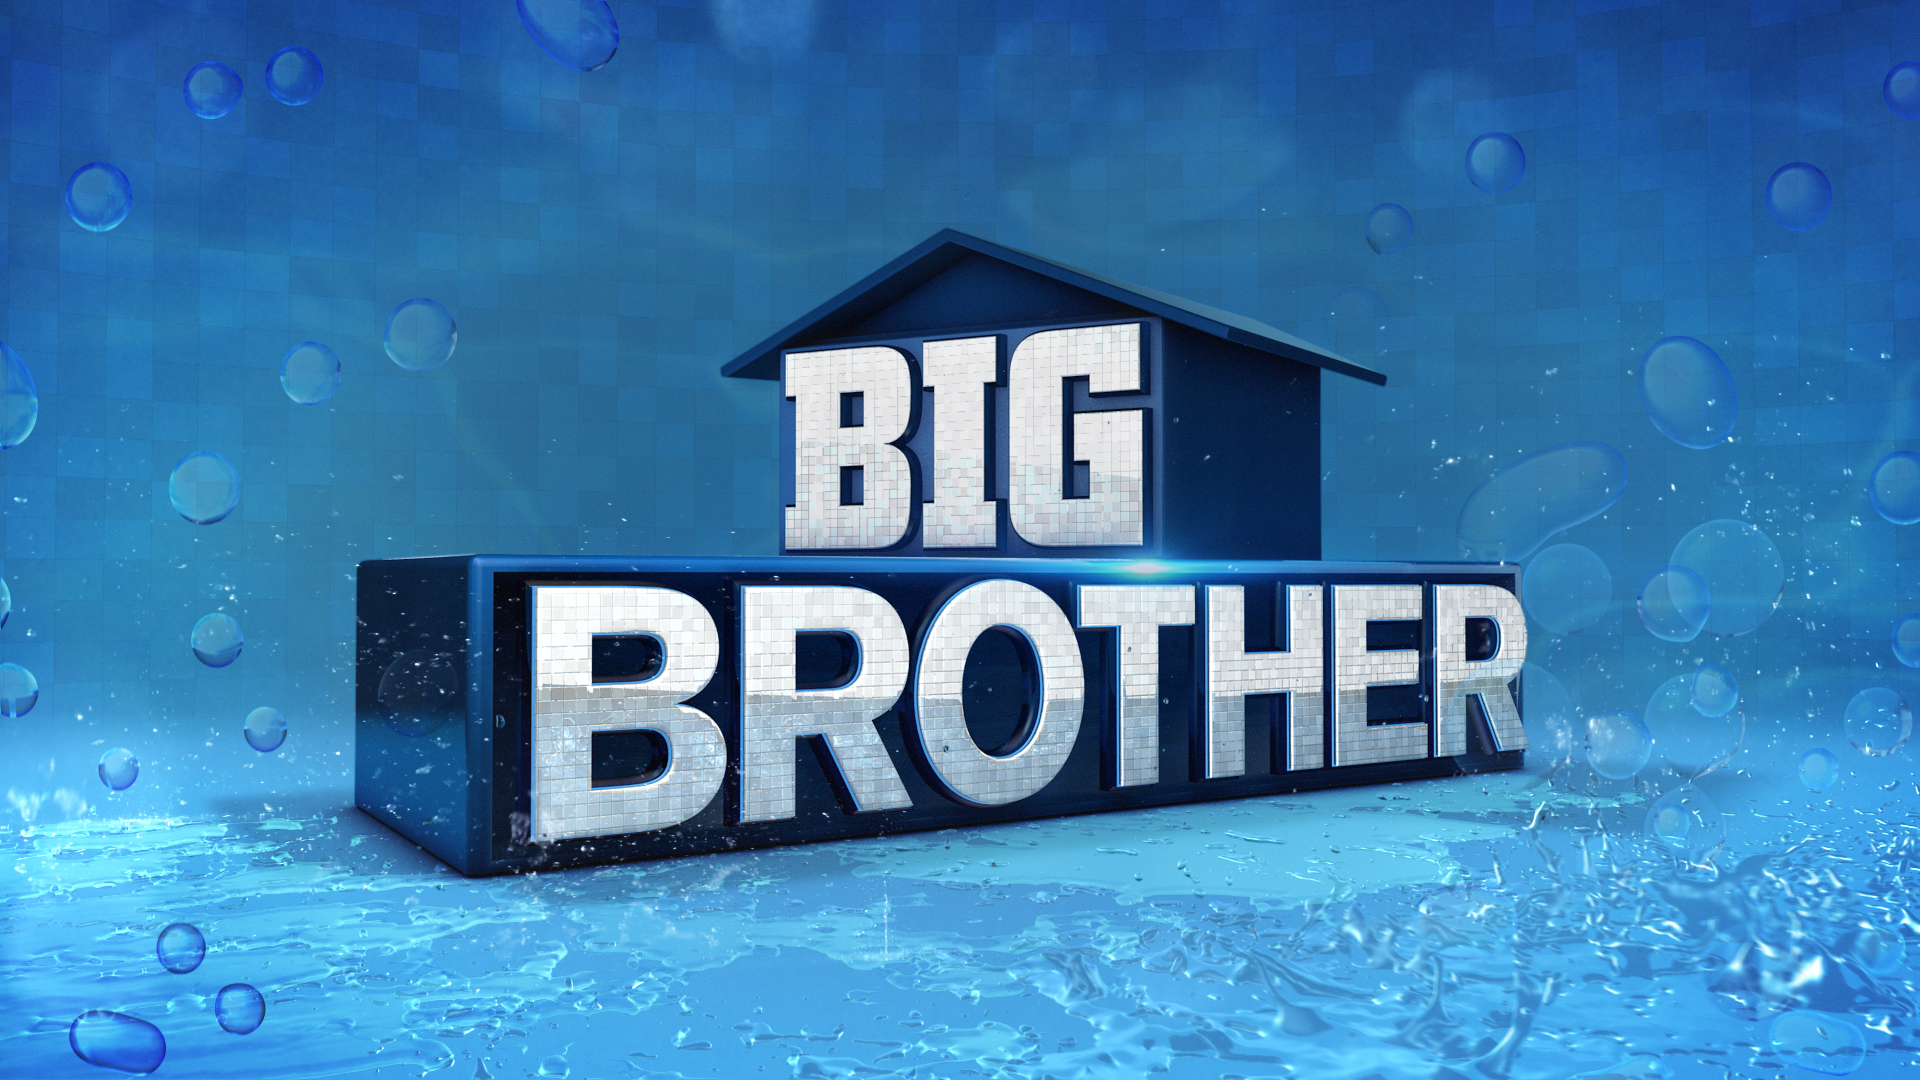 Do you like the new logo for Big Brother? : BigBrother